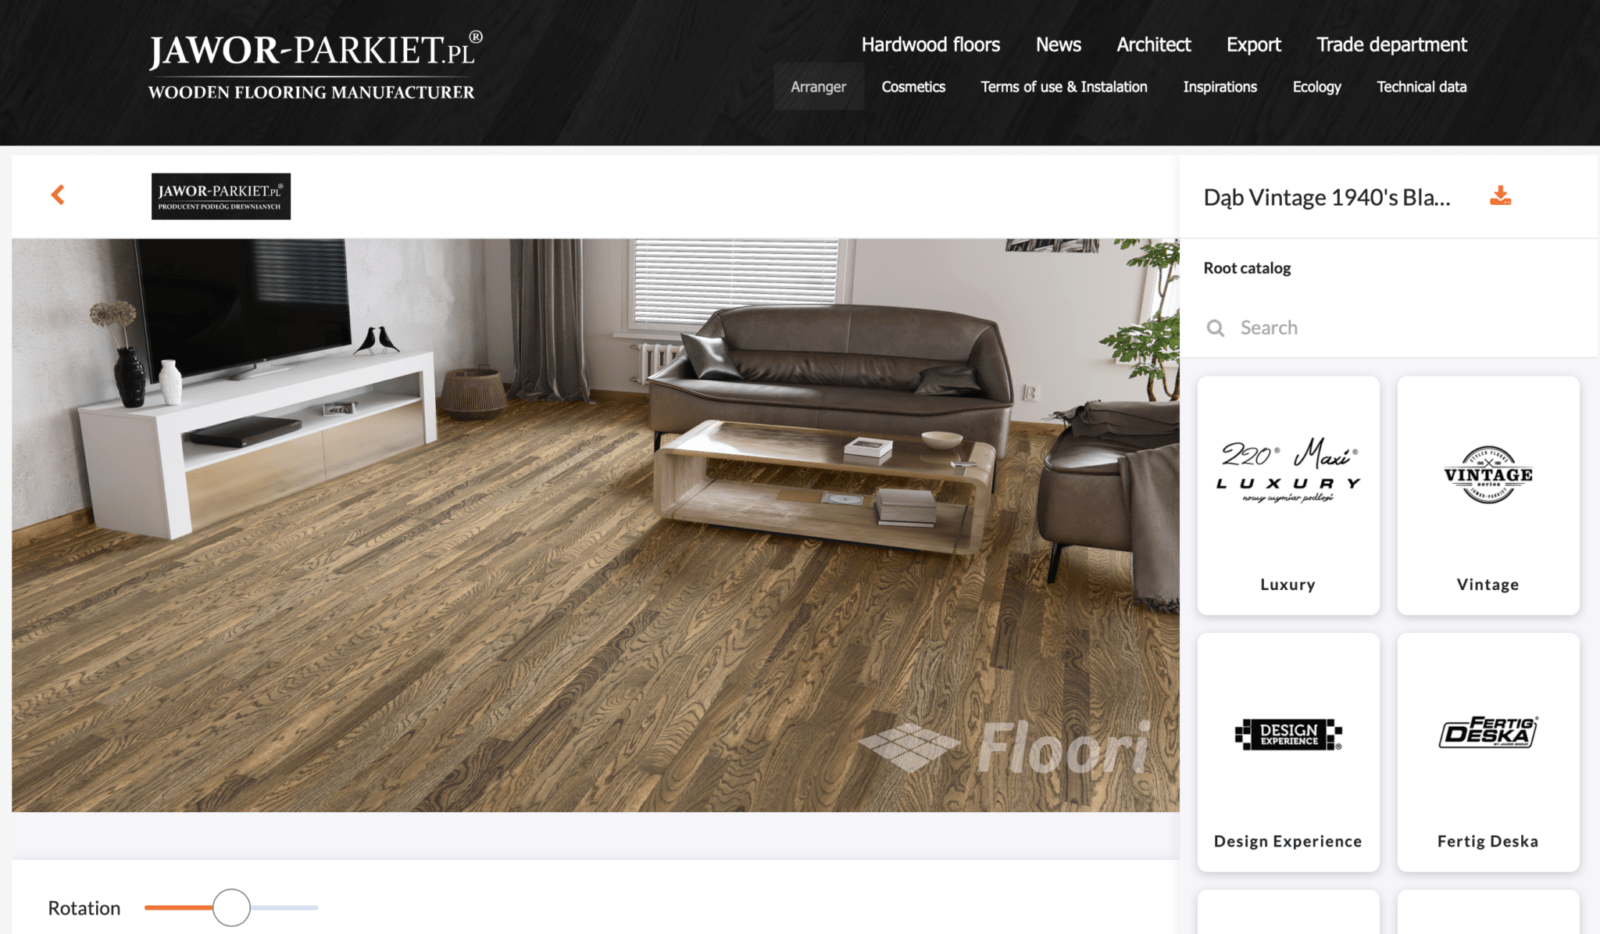 floori-customer-visualizer-floor-ar